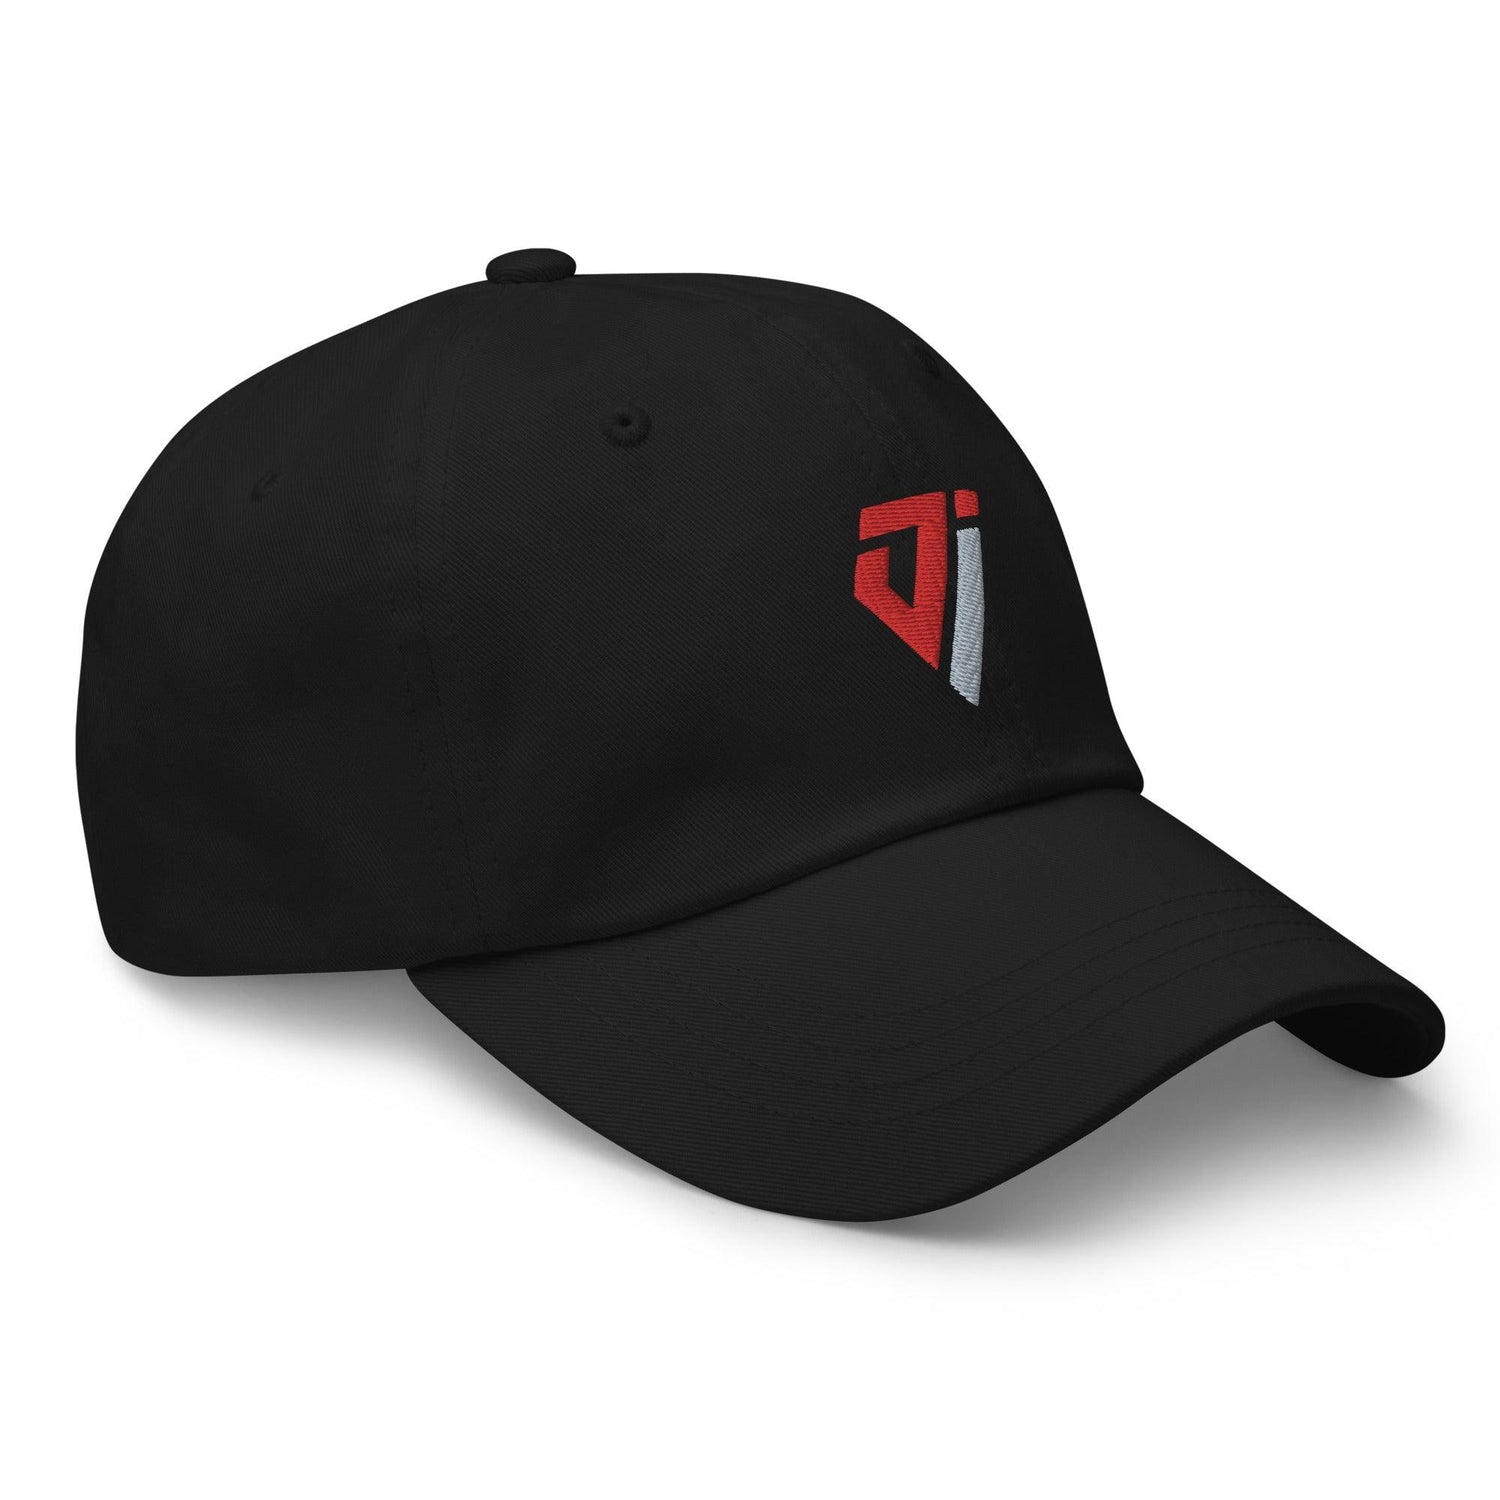 Jimond Ivey "Essential" hat - Fan Arch